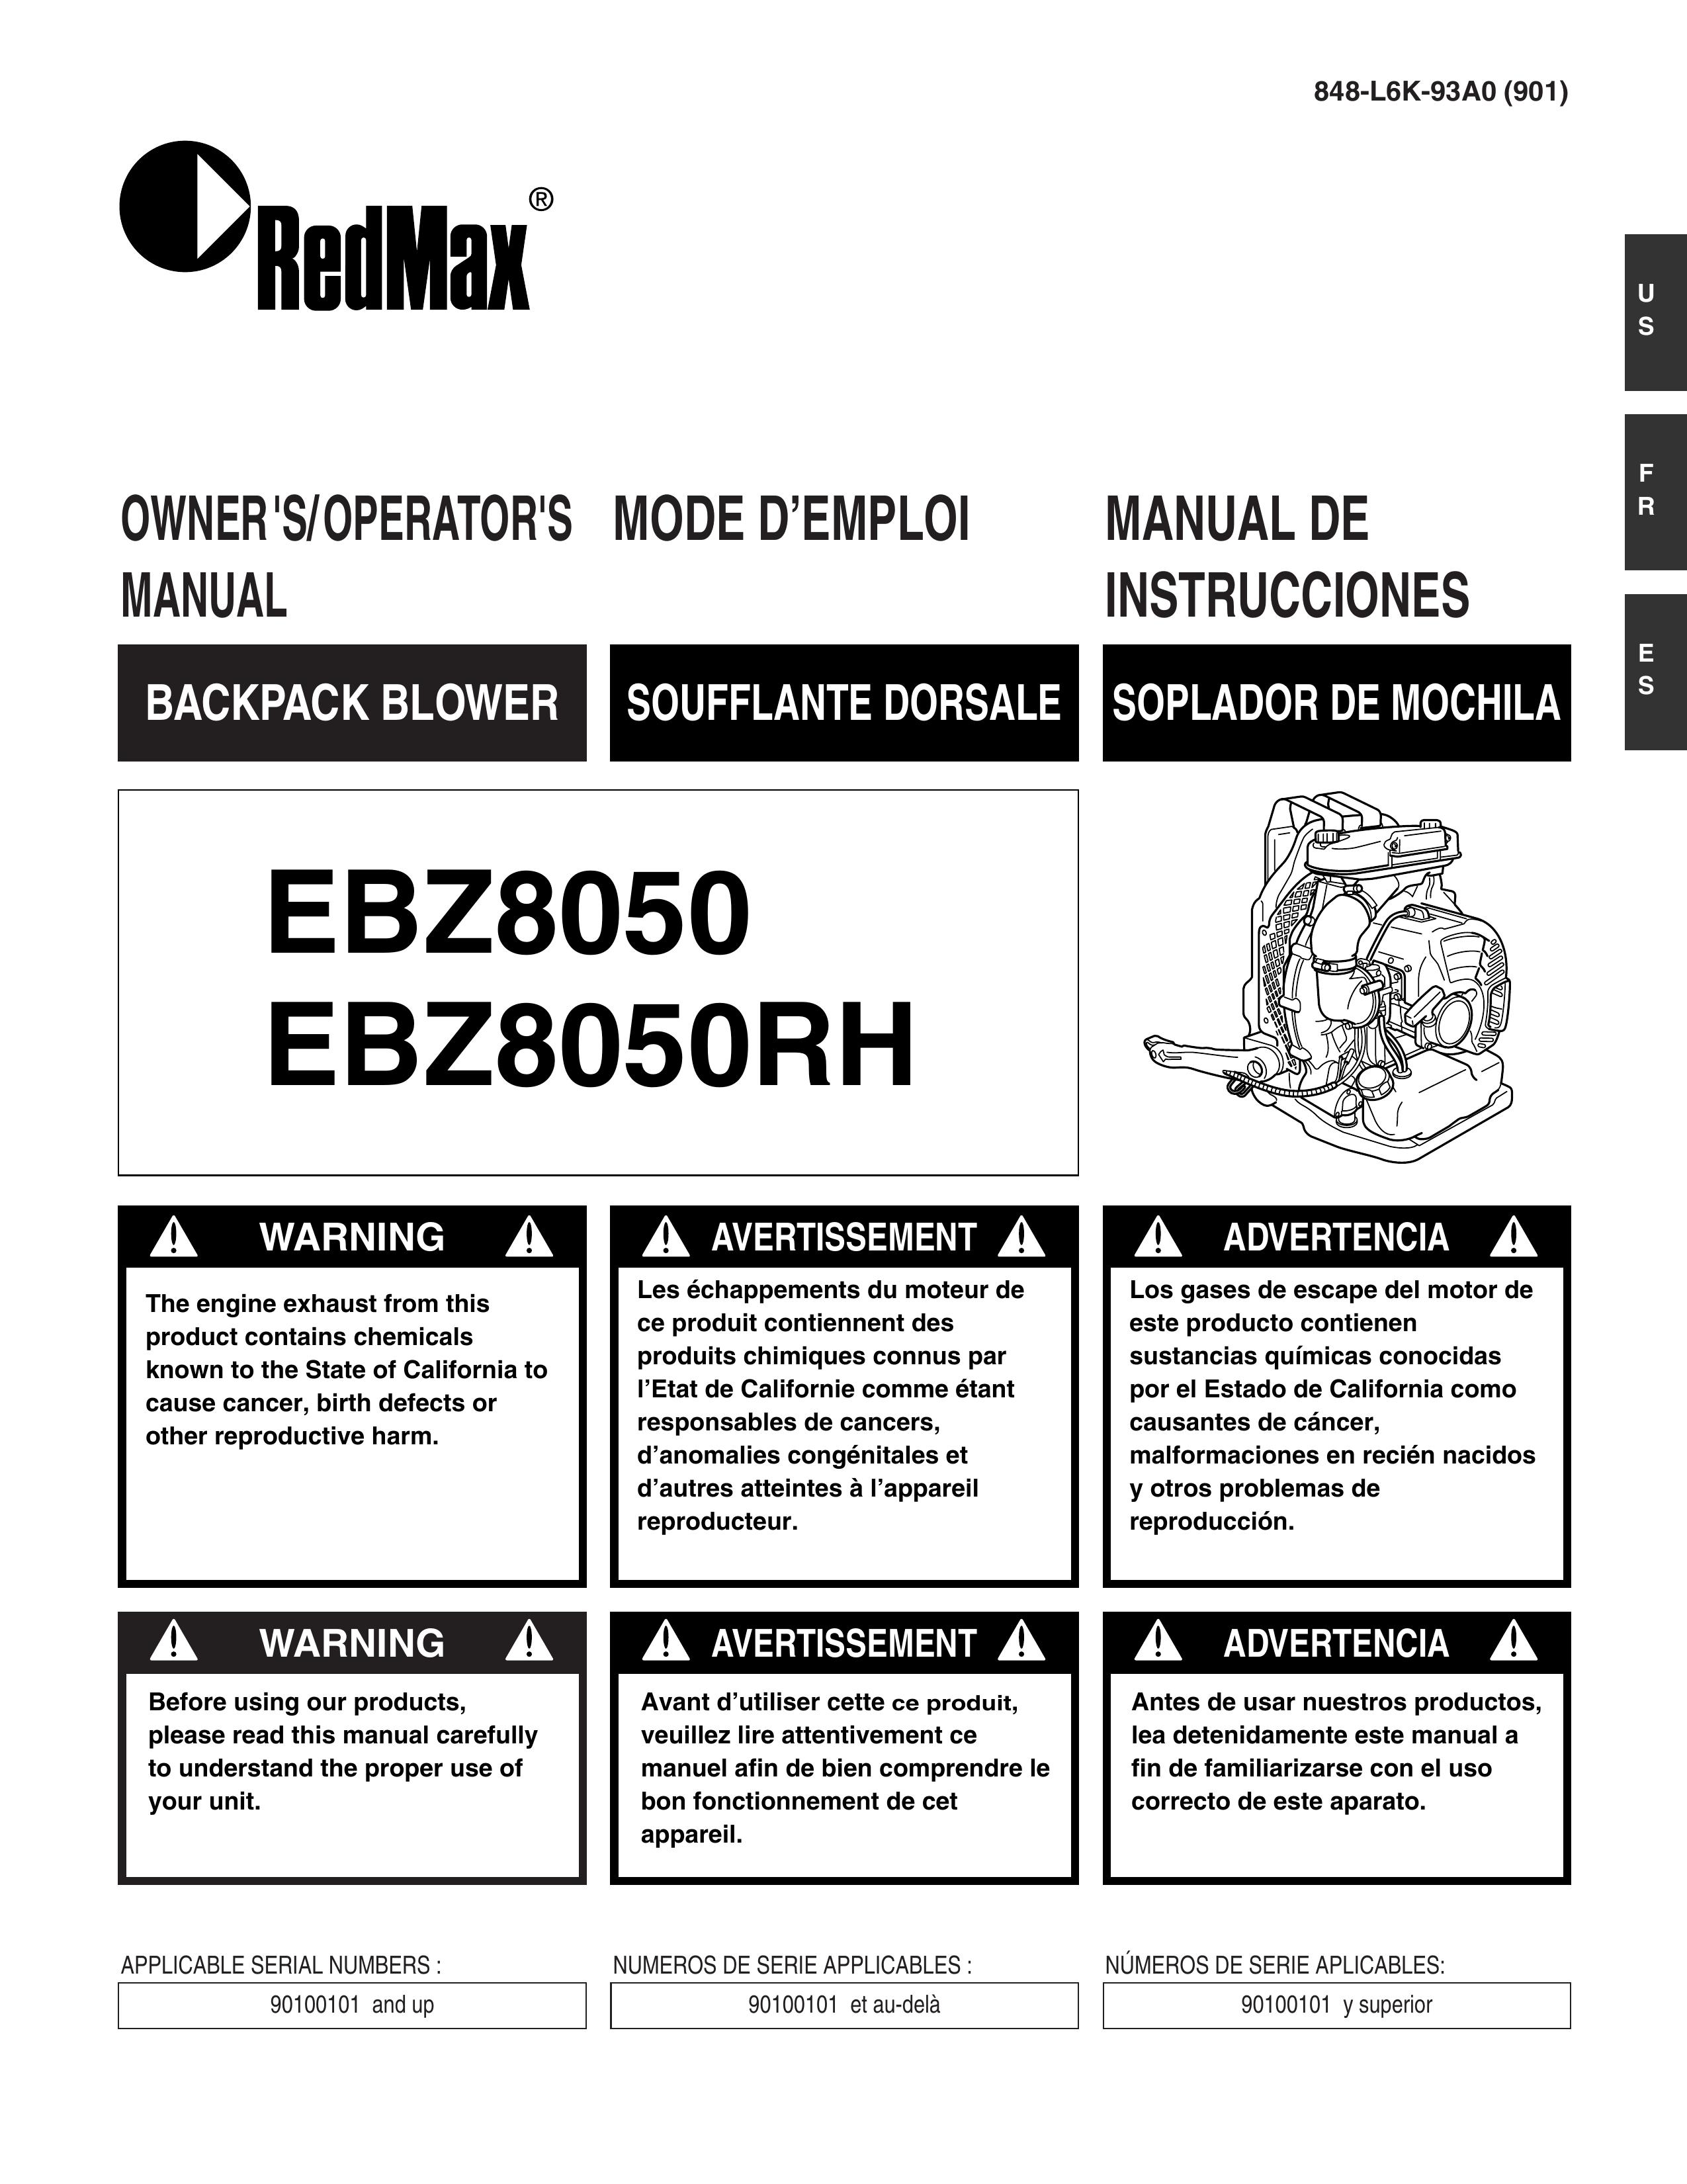 RedMax EBZ8050 Blower User Manual